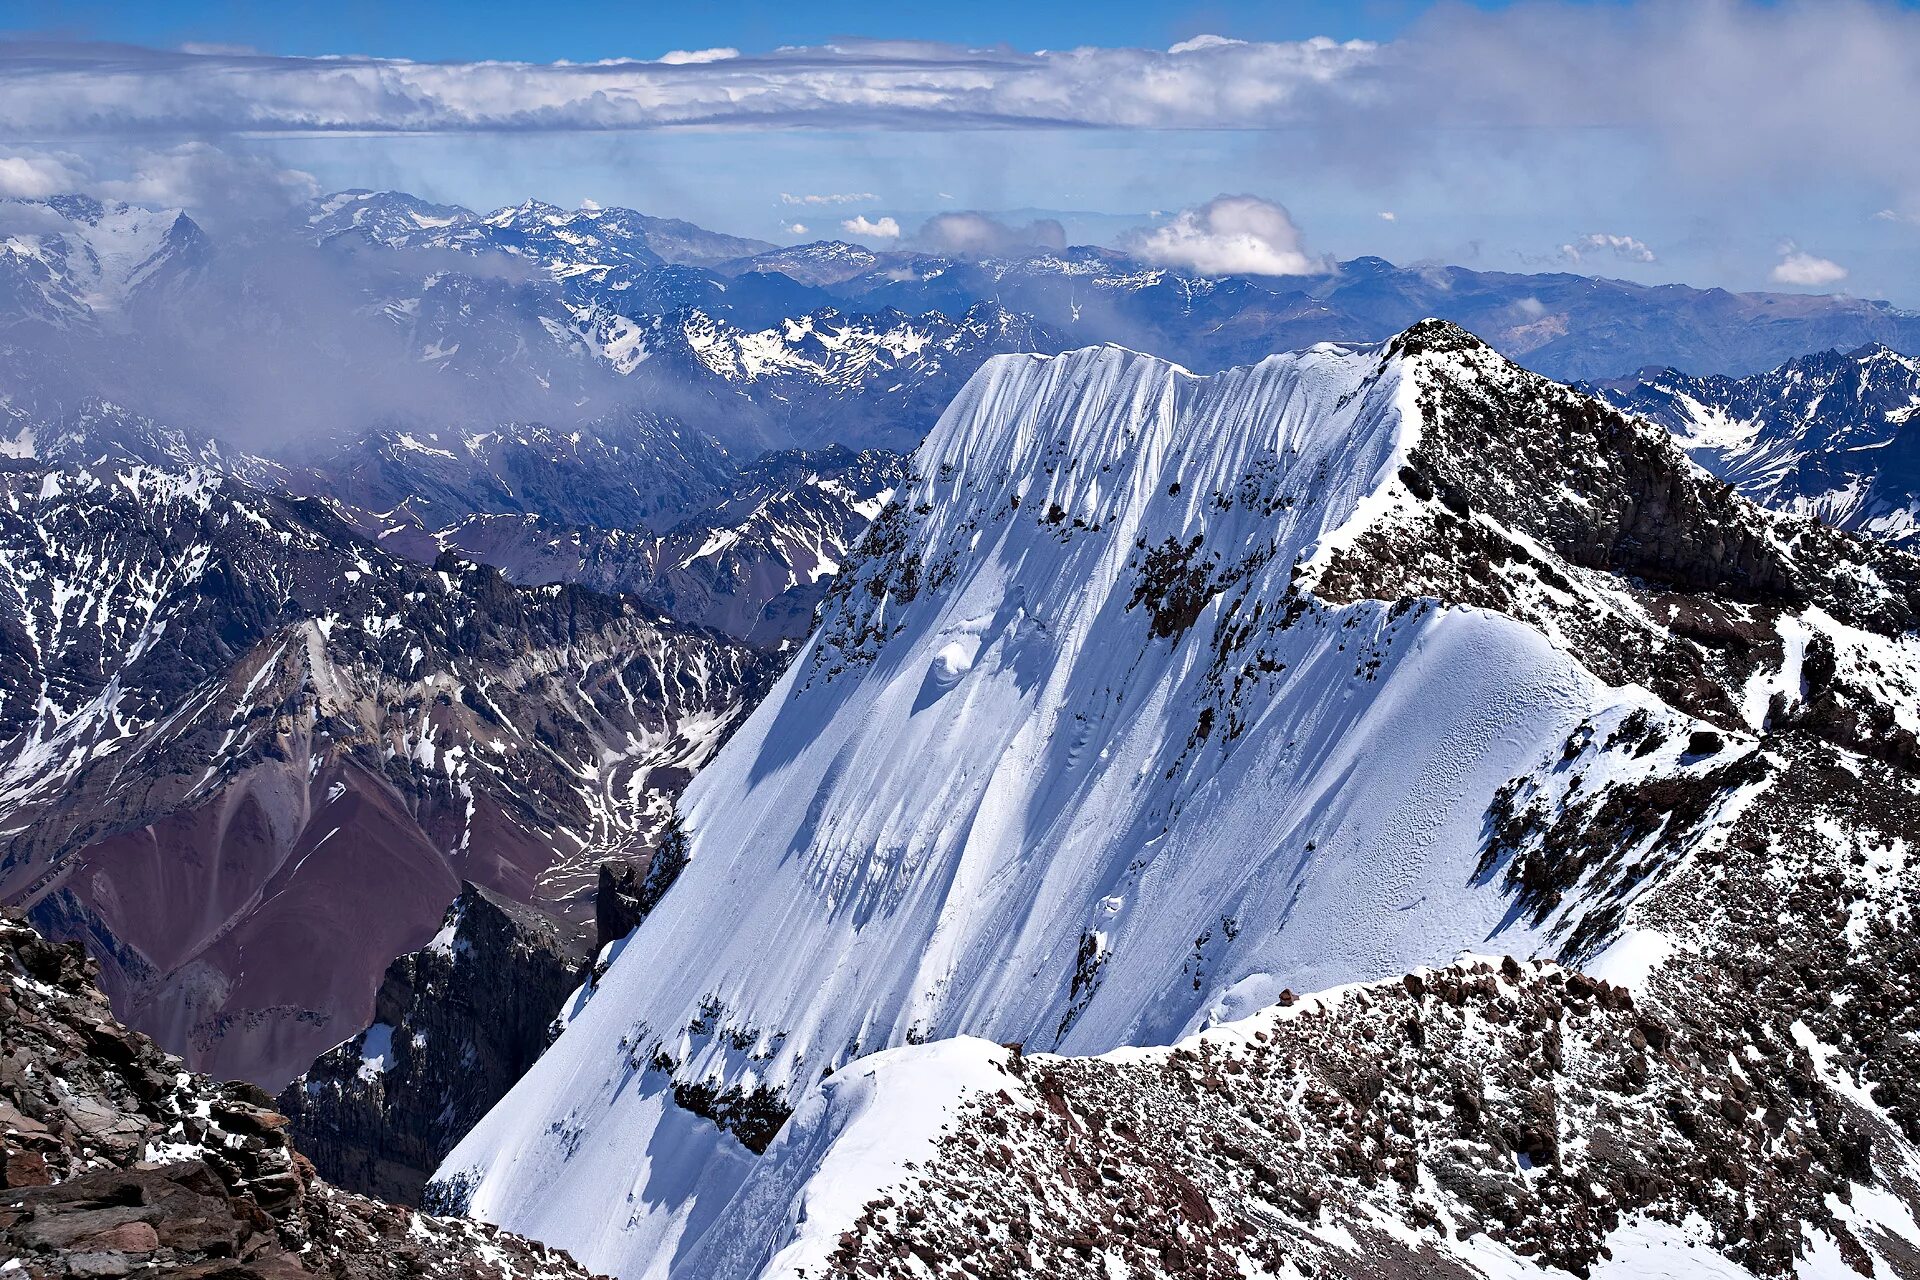 Самая большая гора в мире по площади. Andes Аконкагуа гора. Мендоса Аргентина Аконкагуа. Горная цепь Анды. Южная Америка горы Анды.